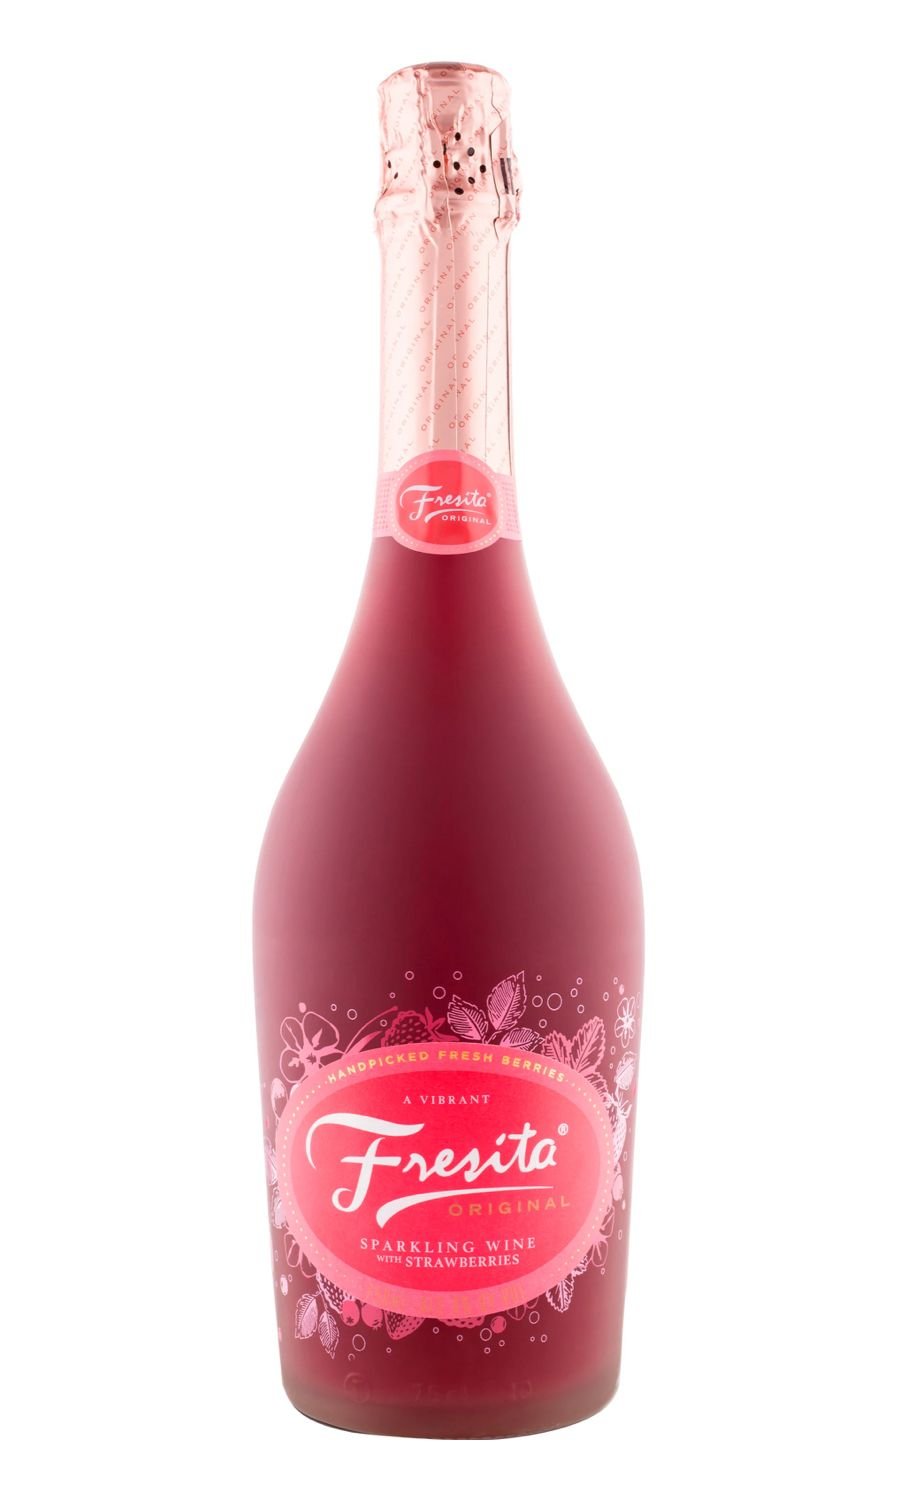 Buy Fresita Original Sparkling Wine with Strawberries NV ...